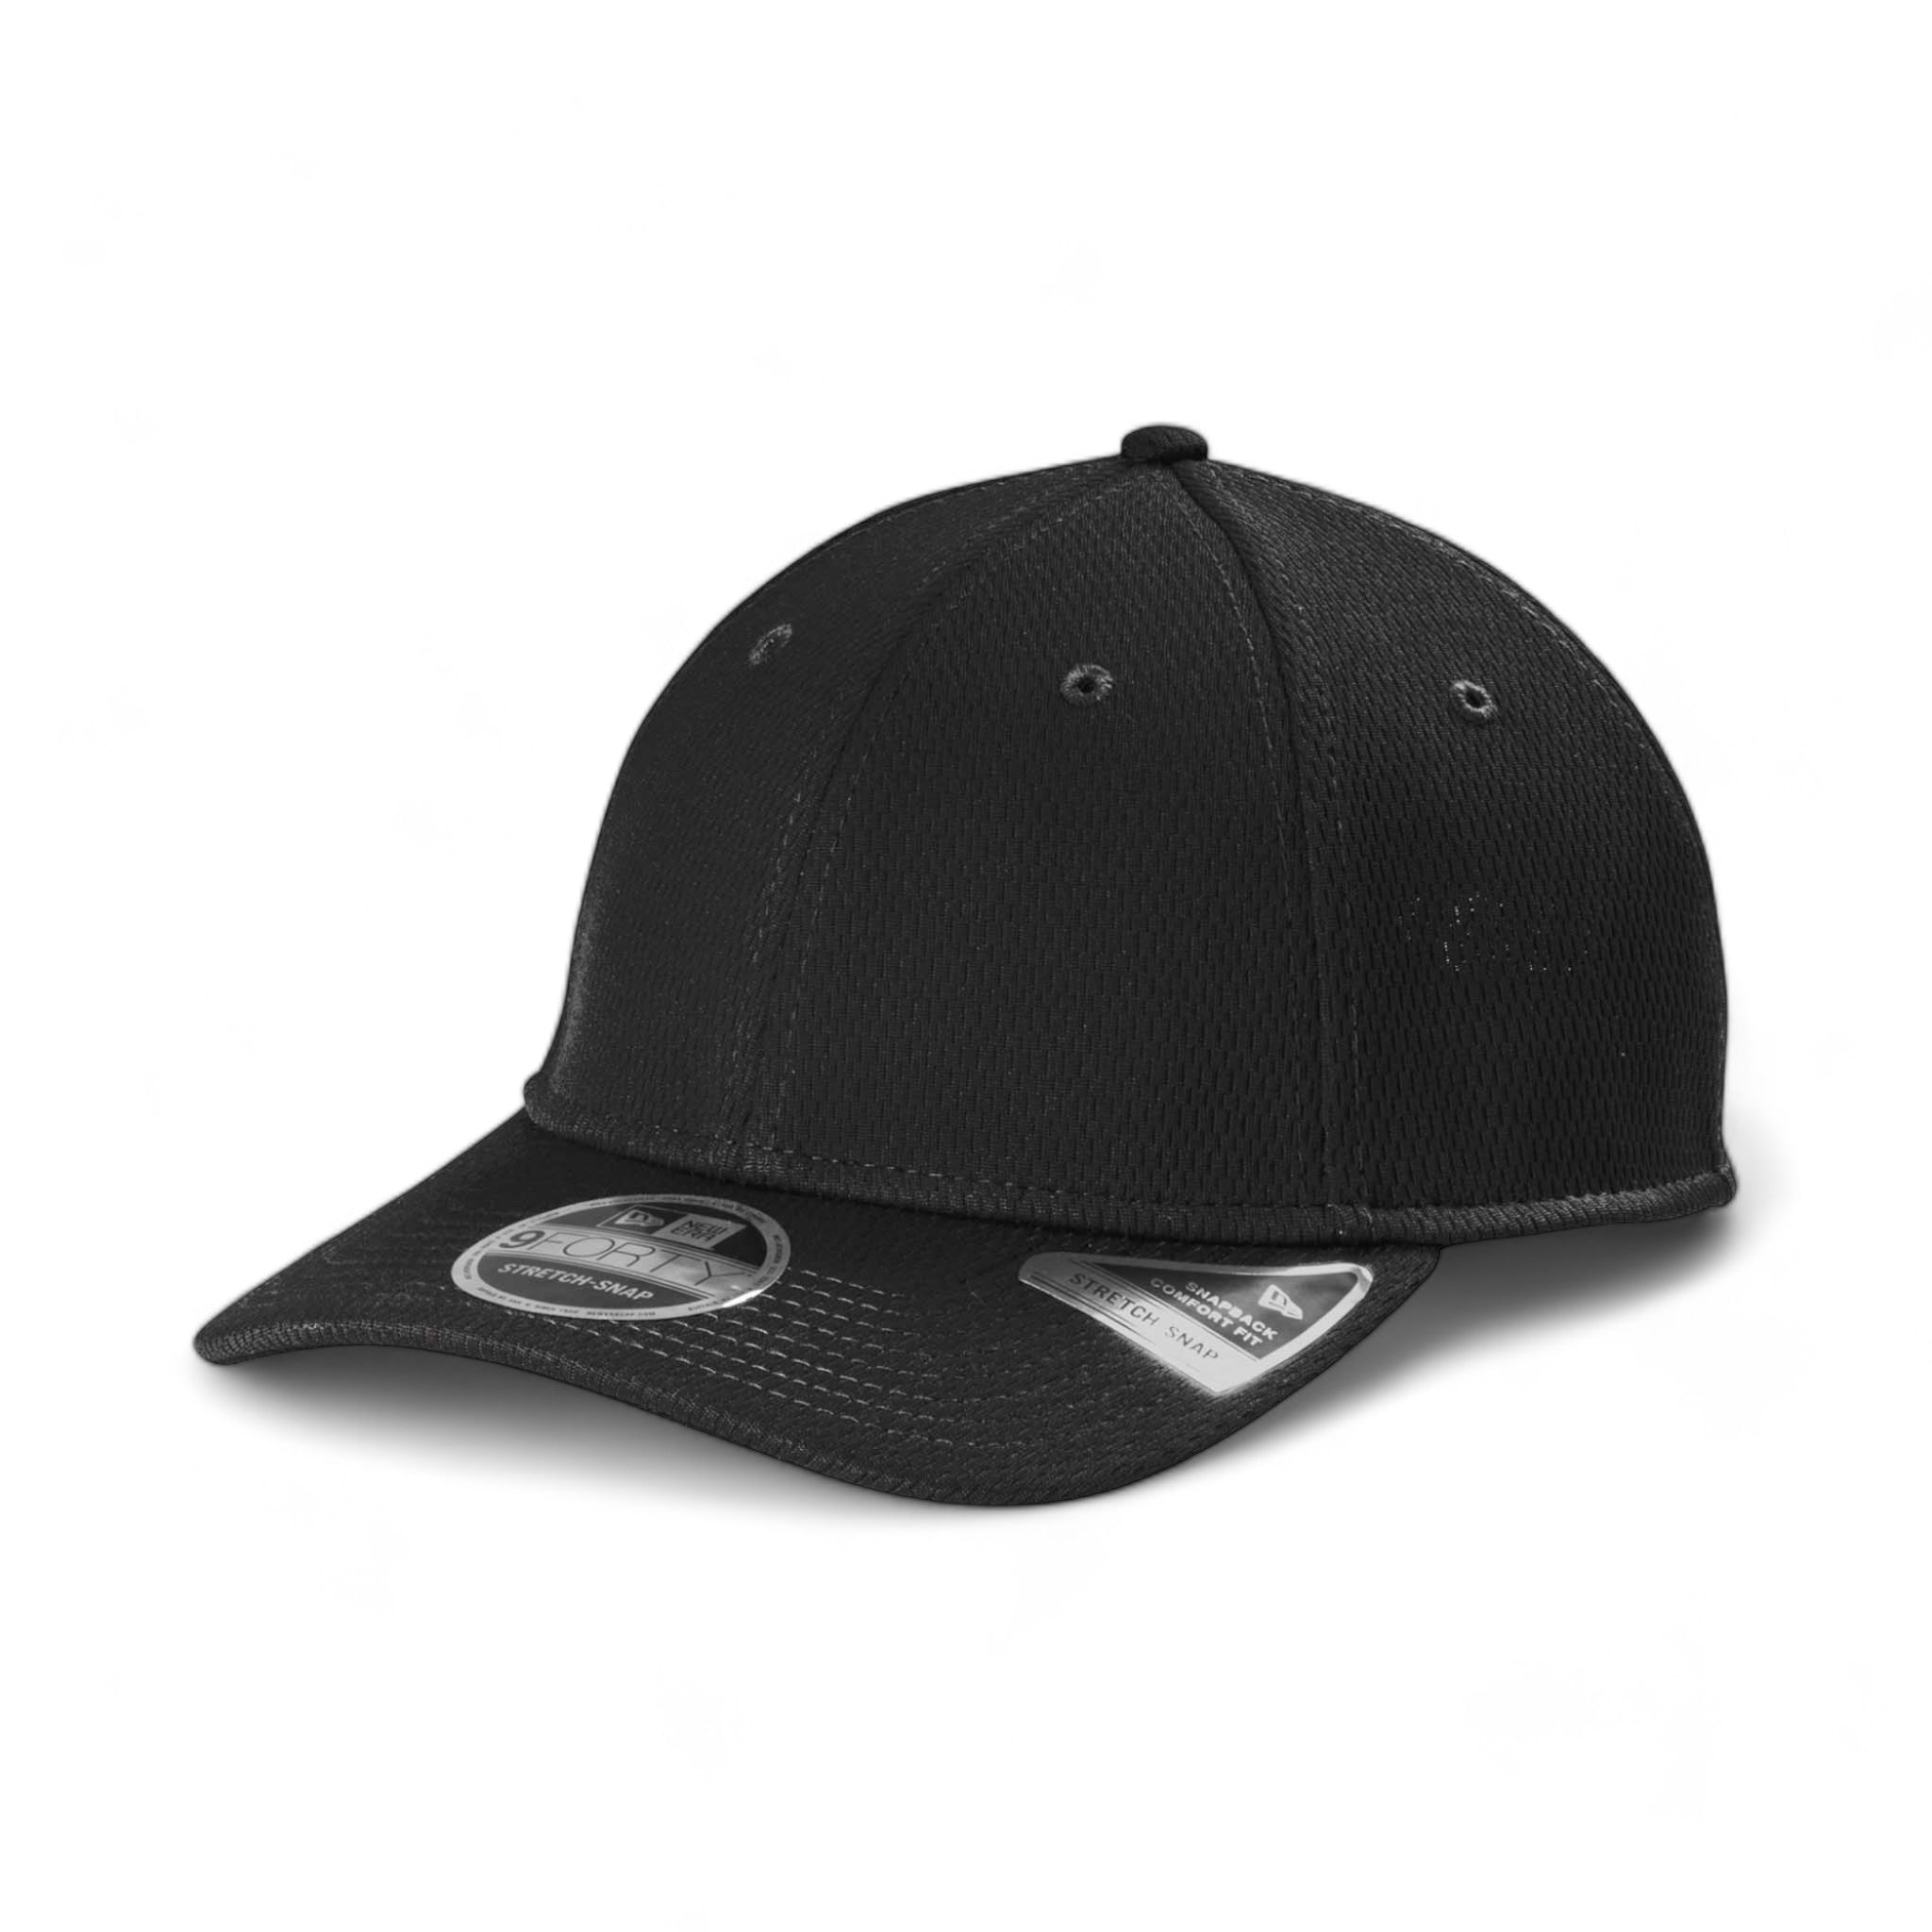 Side view of New Era NE209 custom hat in black